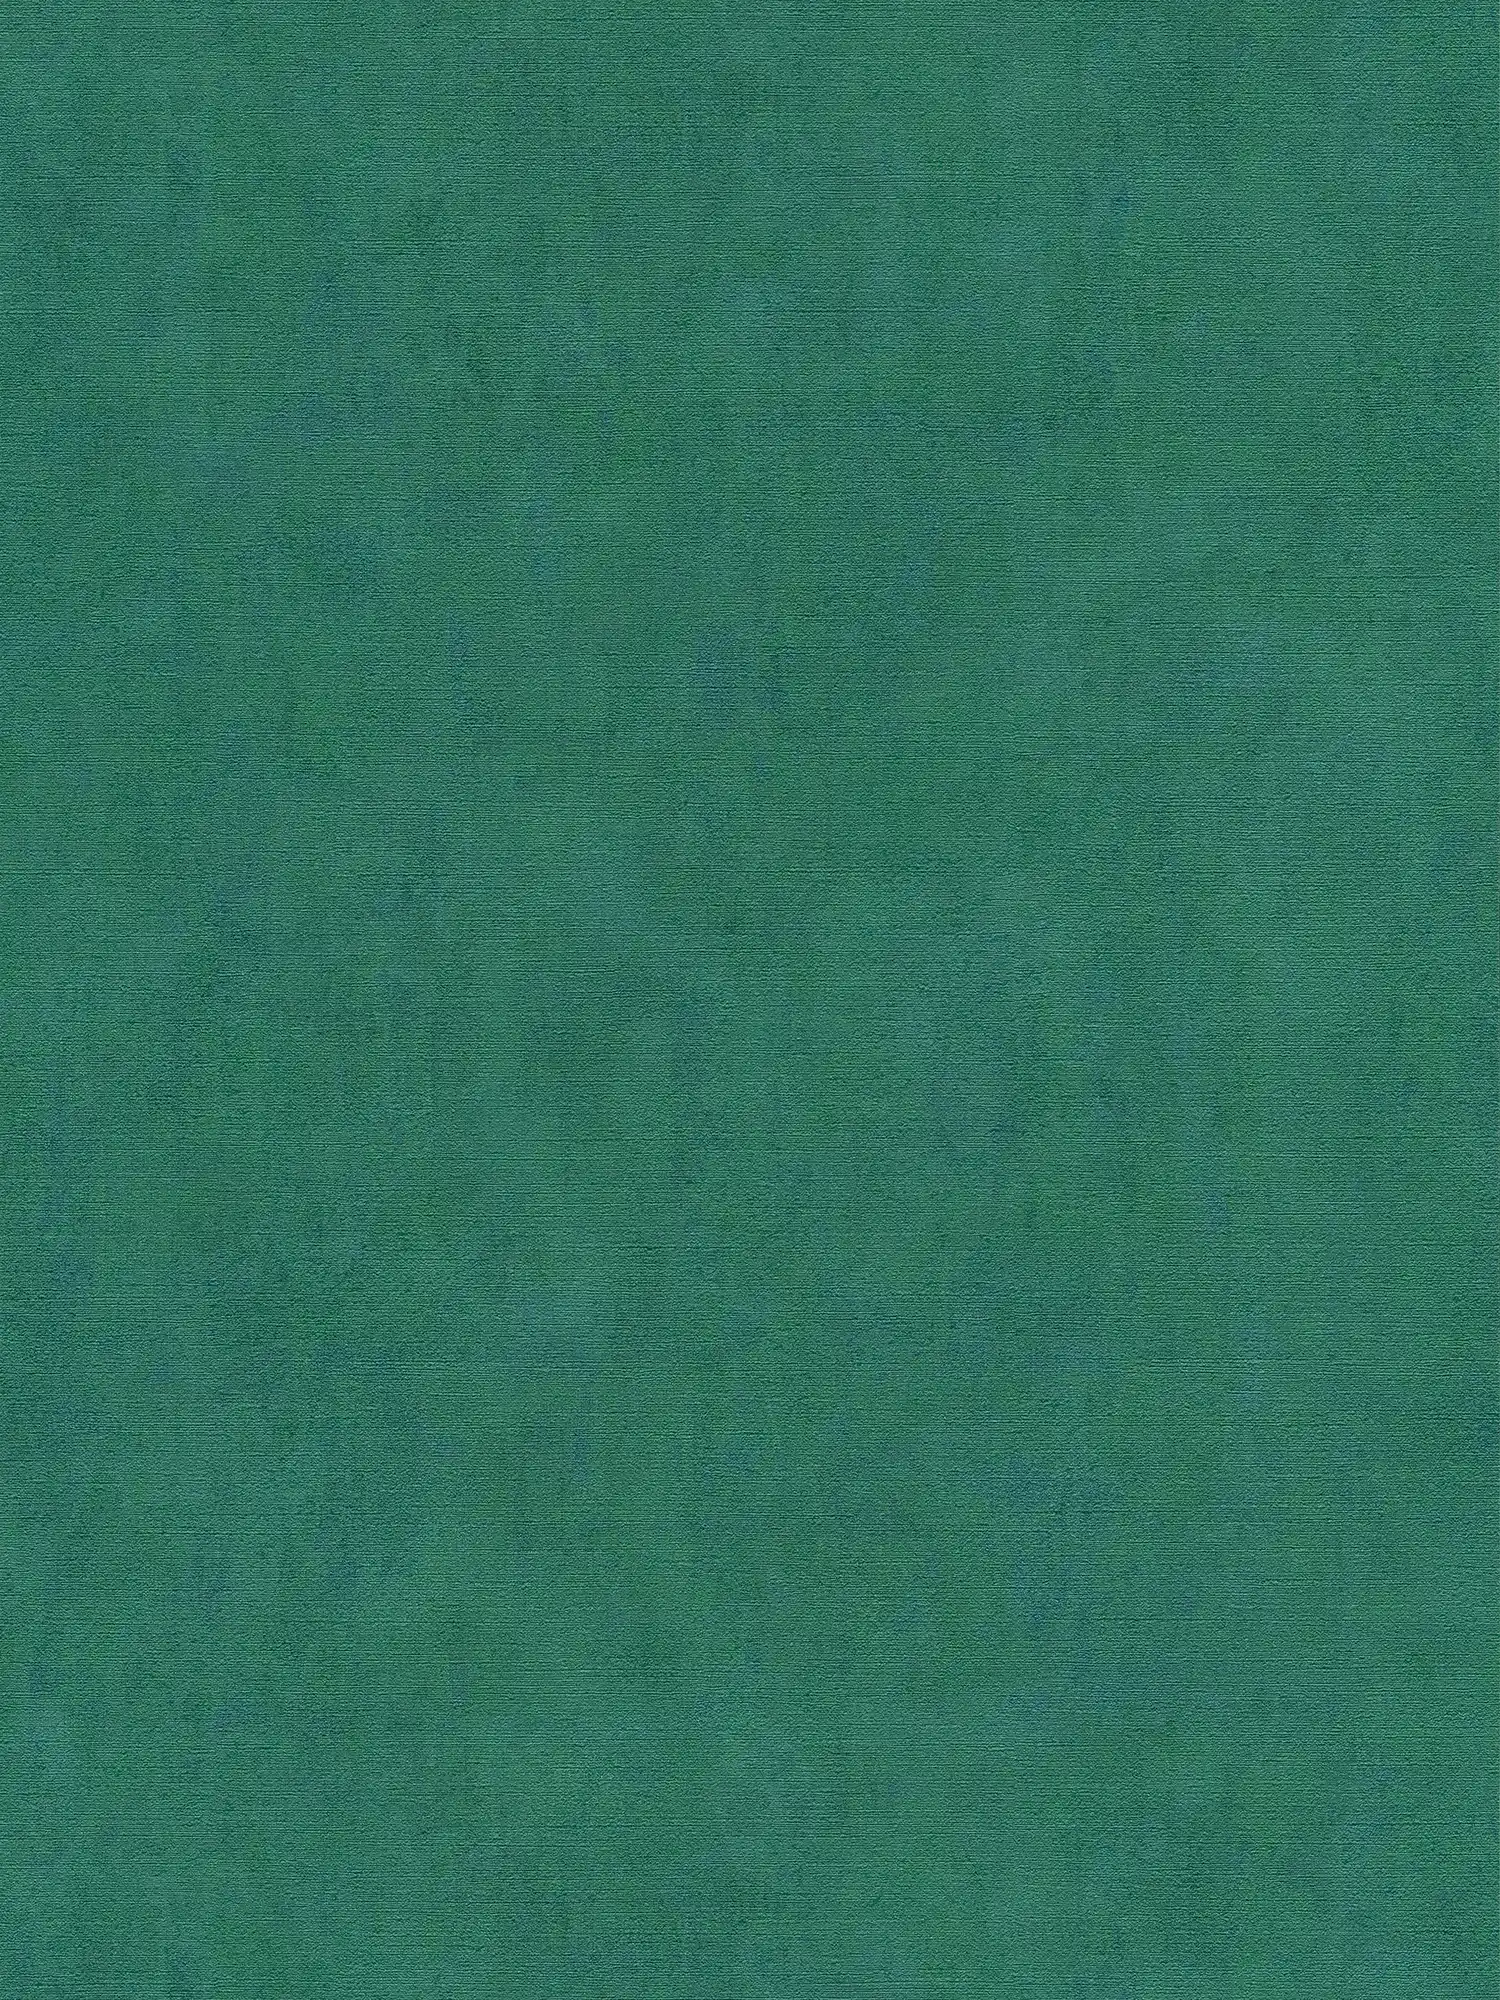 Tapete Smaragdgrün meliert mit blauem Metallic Effekt – Blau, Grün
